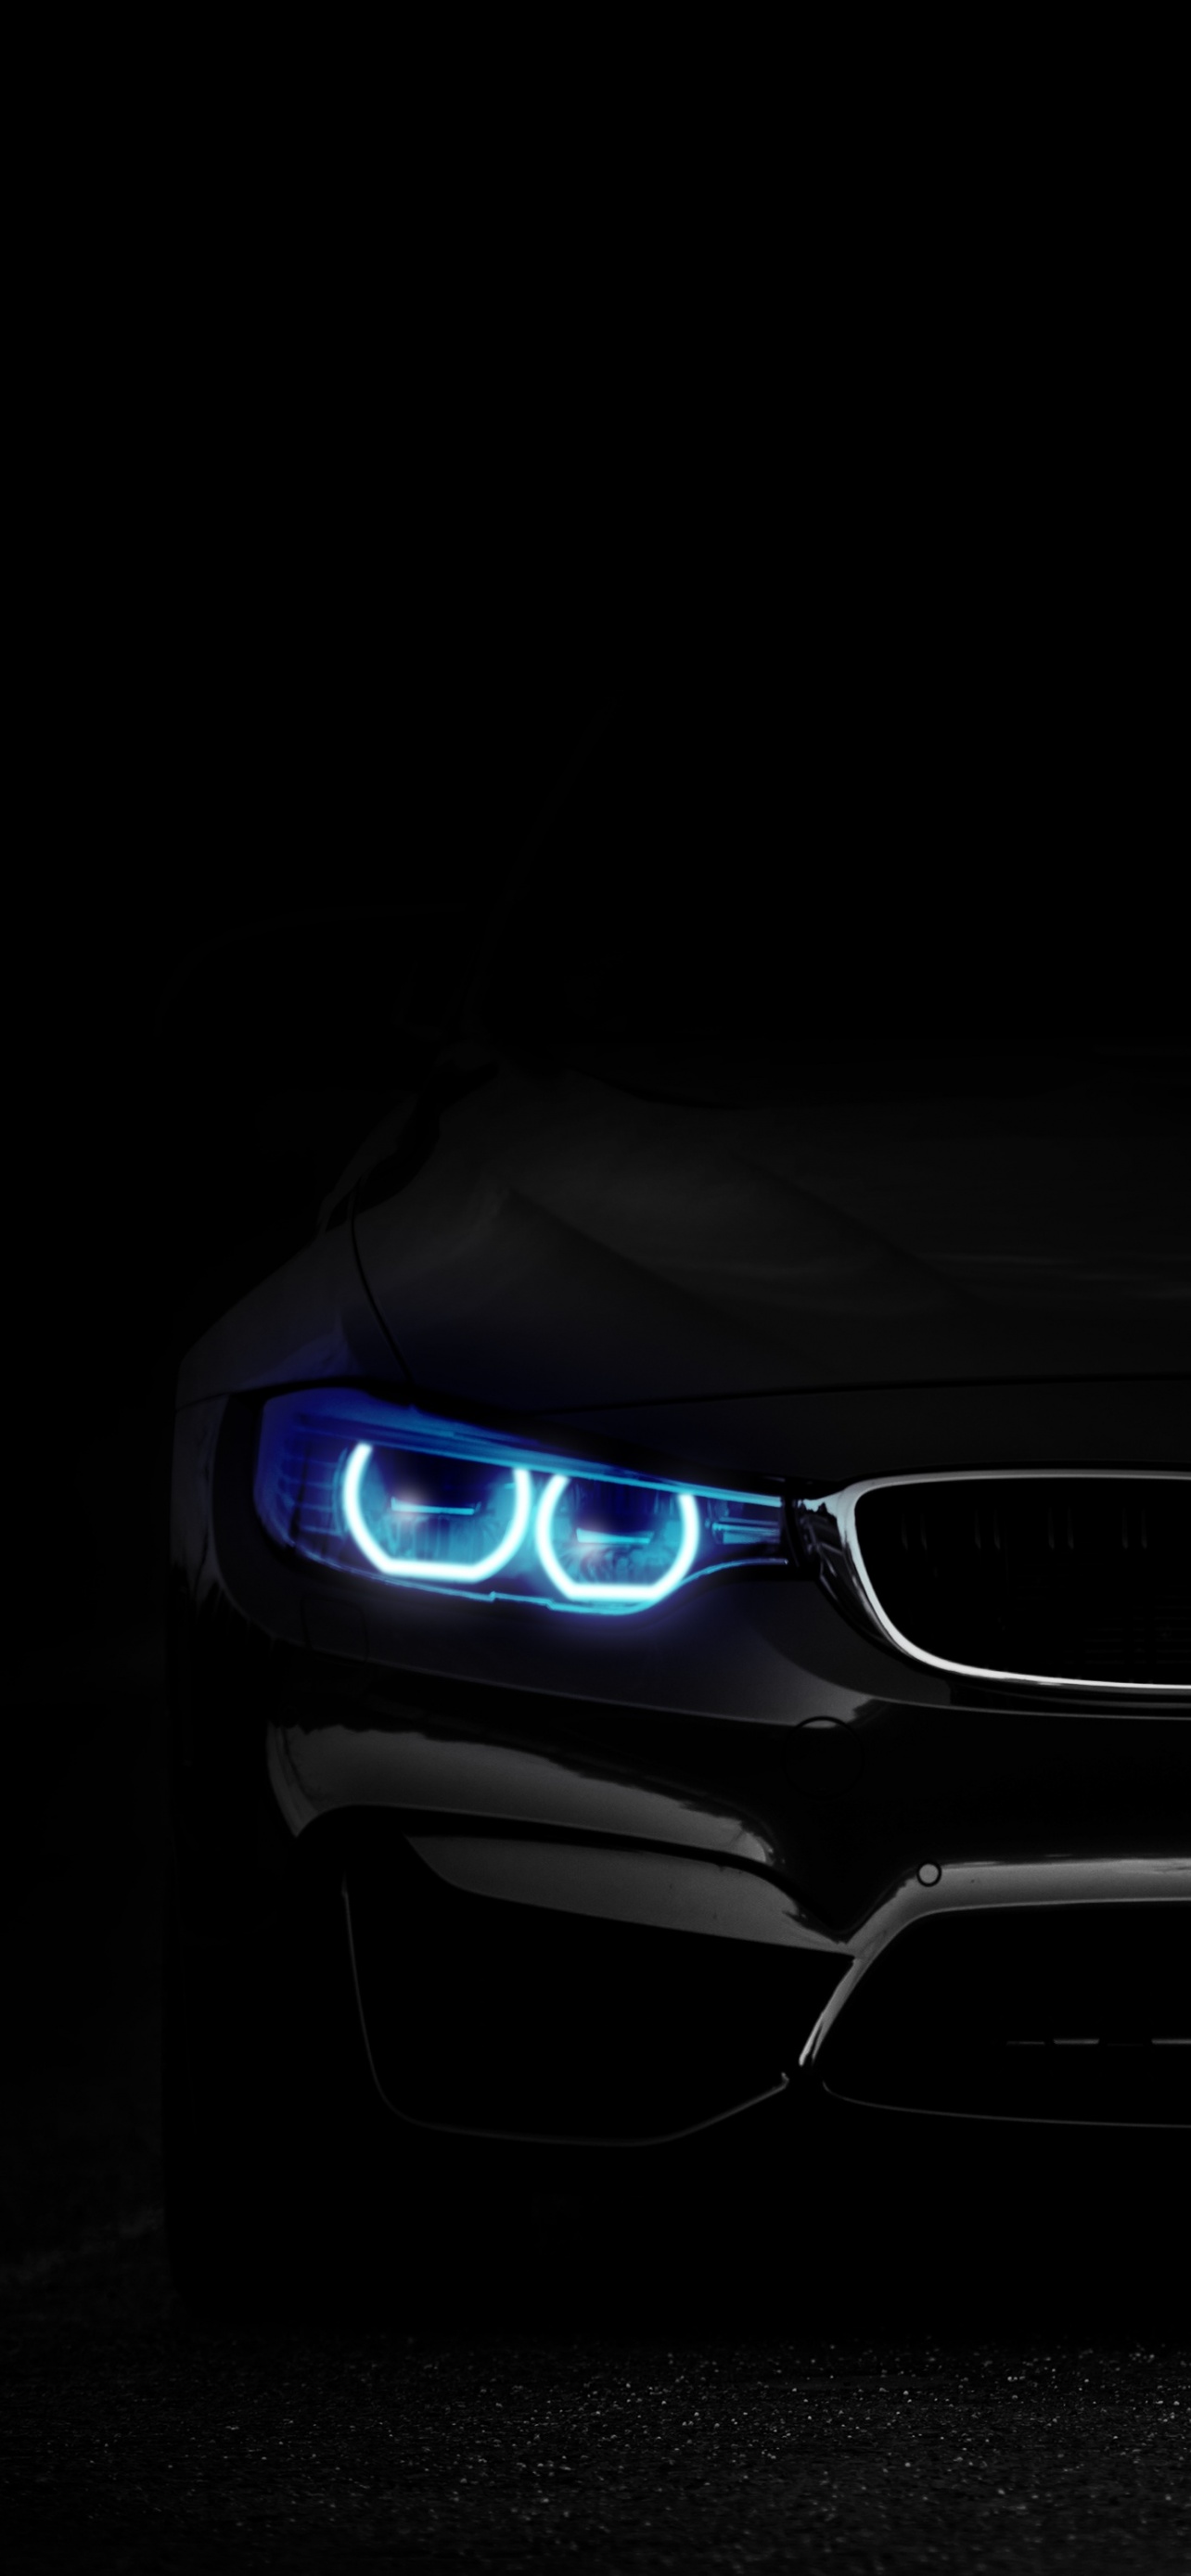 BMW M3 Wallpaper 4K, Angel Eyes, Black background, 5K